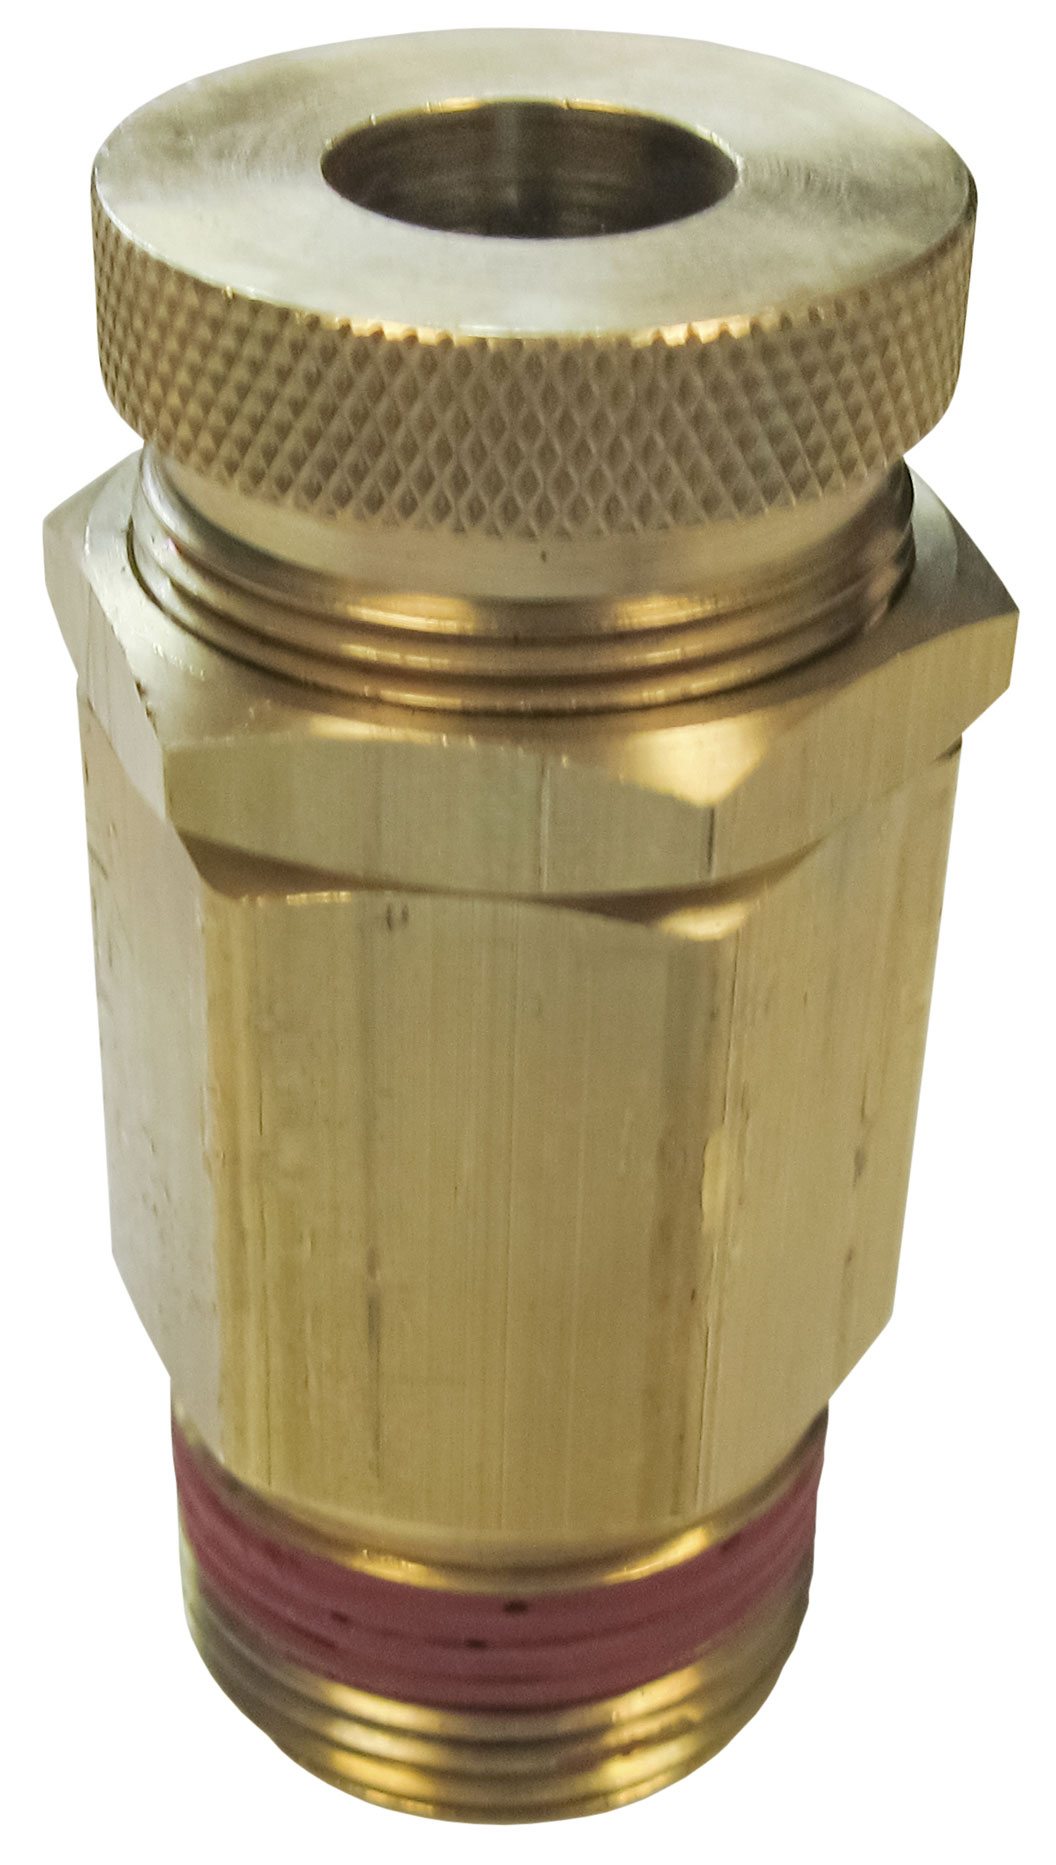 Brass vacuum release valve - 3/4" NPT